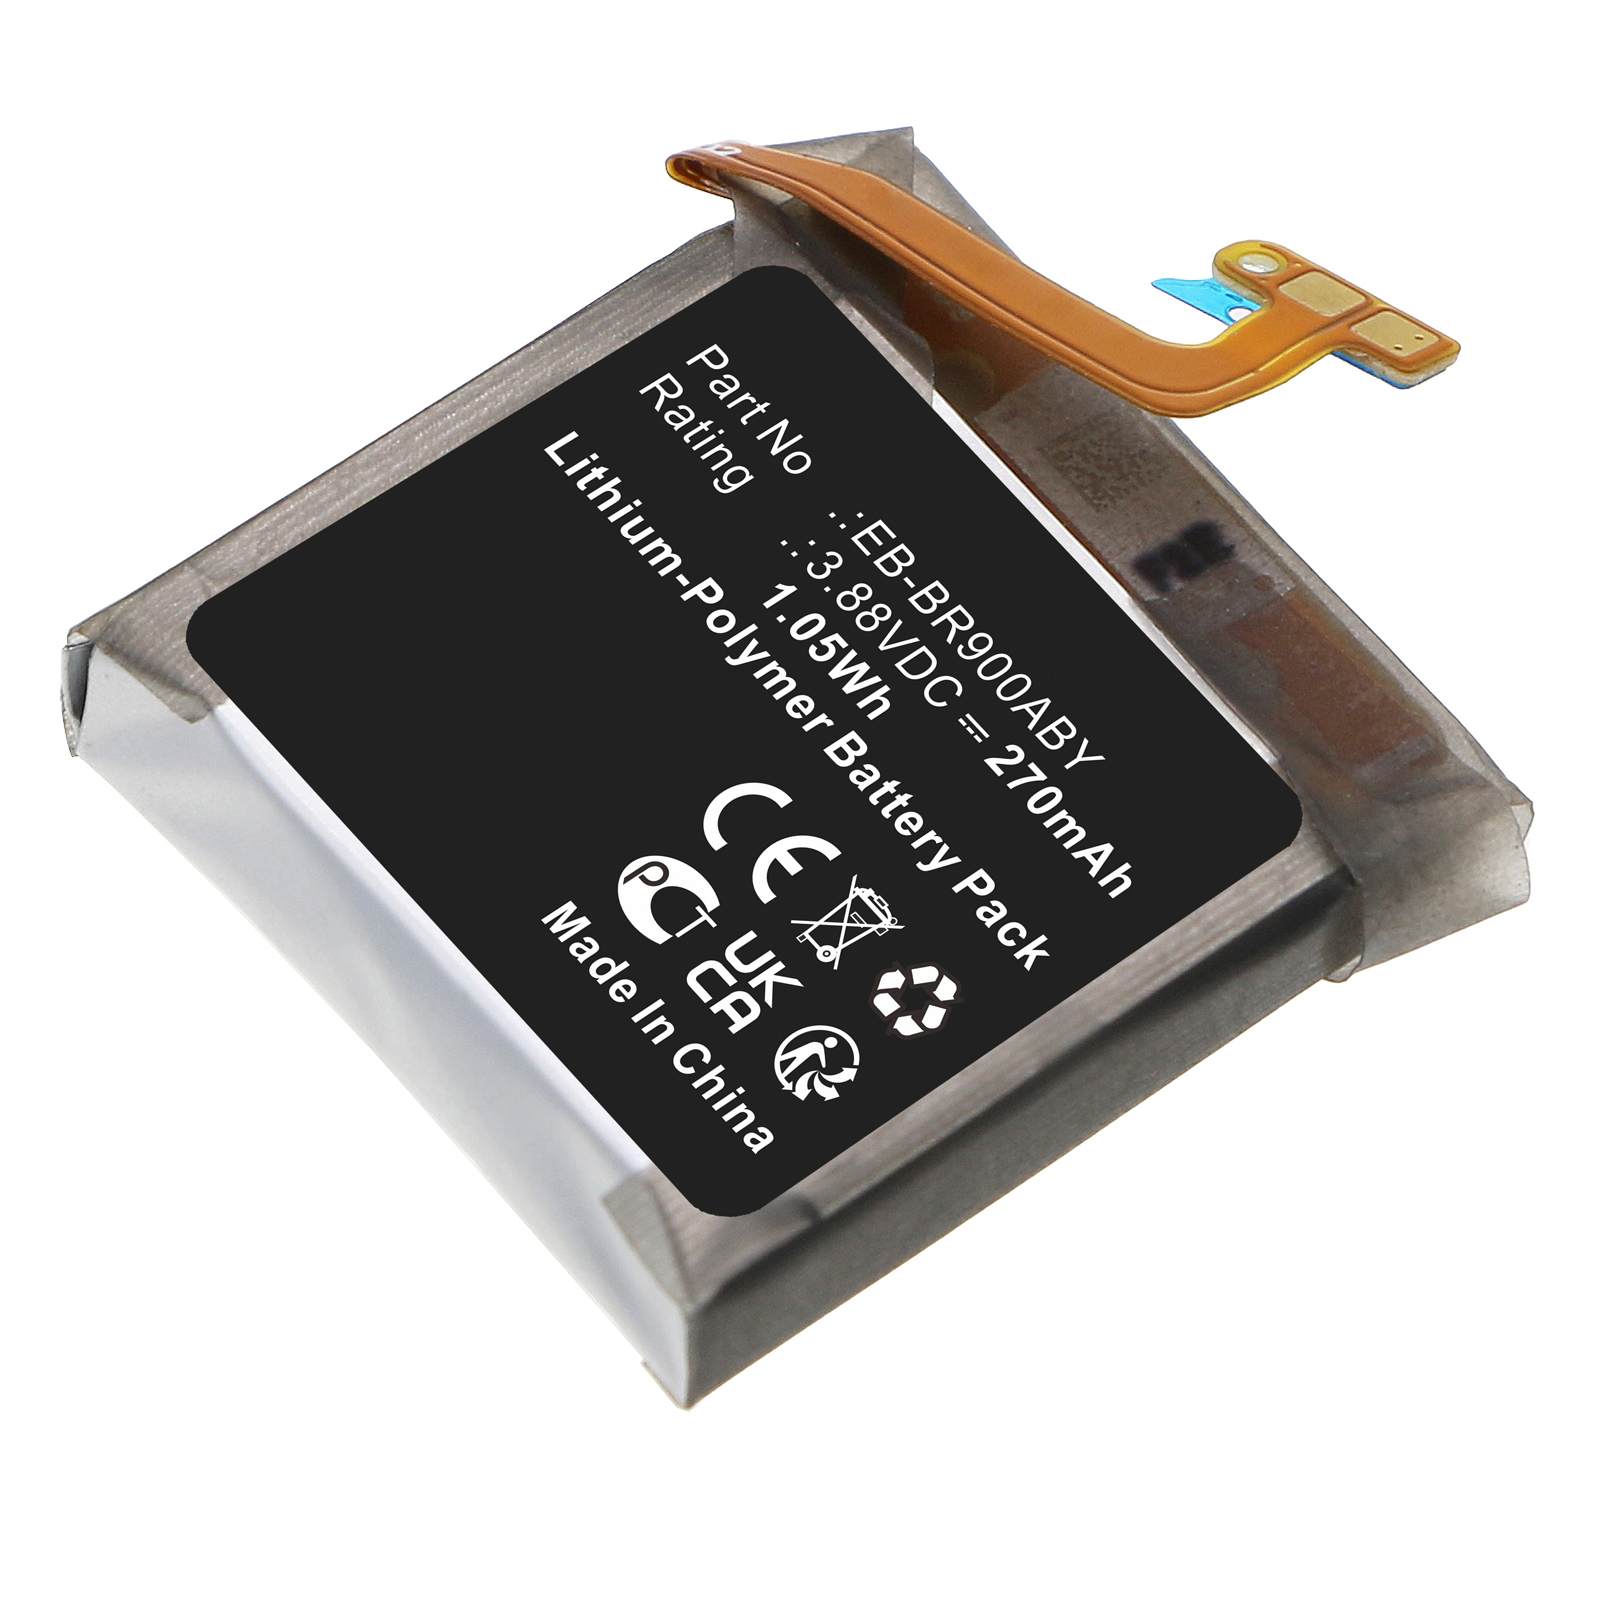 Synergy Digital Smartwatch Battery, Compatible with Samsung EB-BR900ABY Smartwatch Battery (Li-Pol, 3.88V, 270mAh)